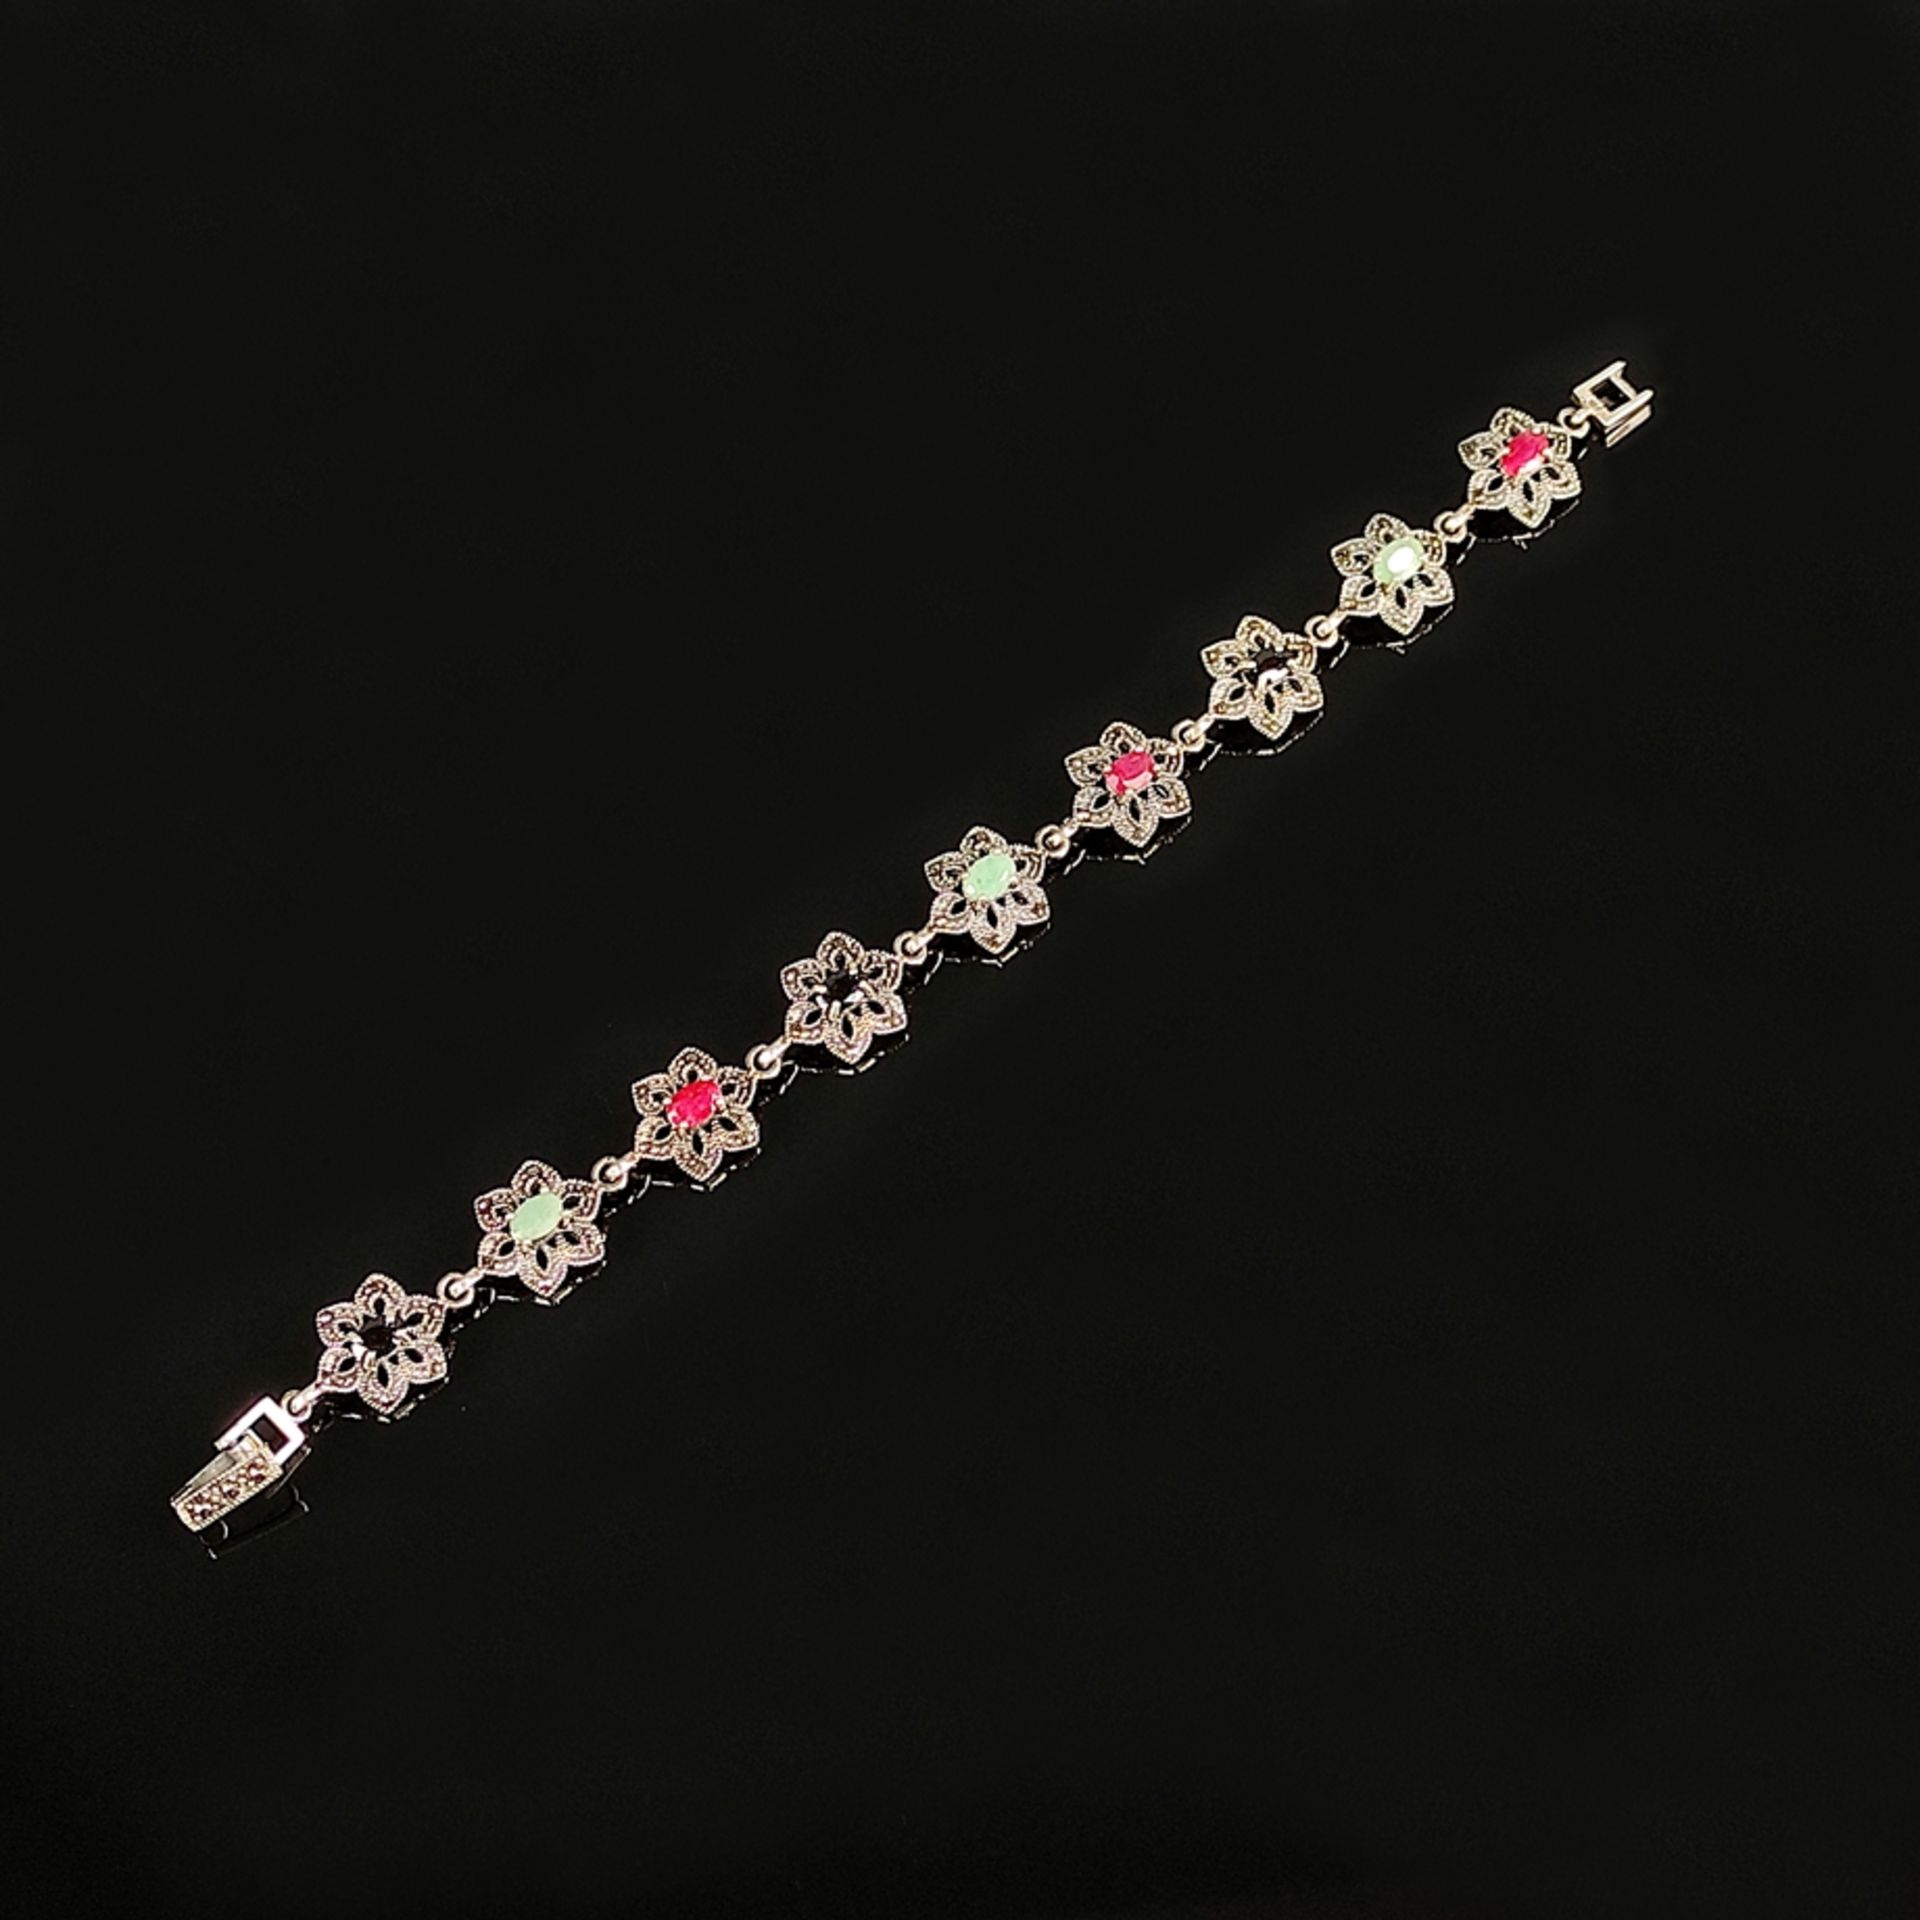 Gemstone bracelet, silver 925, total weight 18.5g, bracelet designed in the shape of 9 stars and se - Image 2 of 3